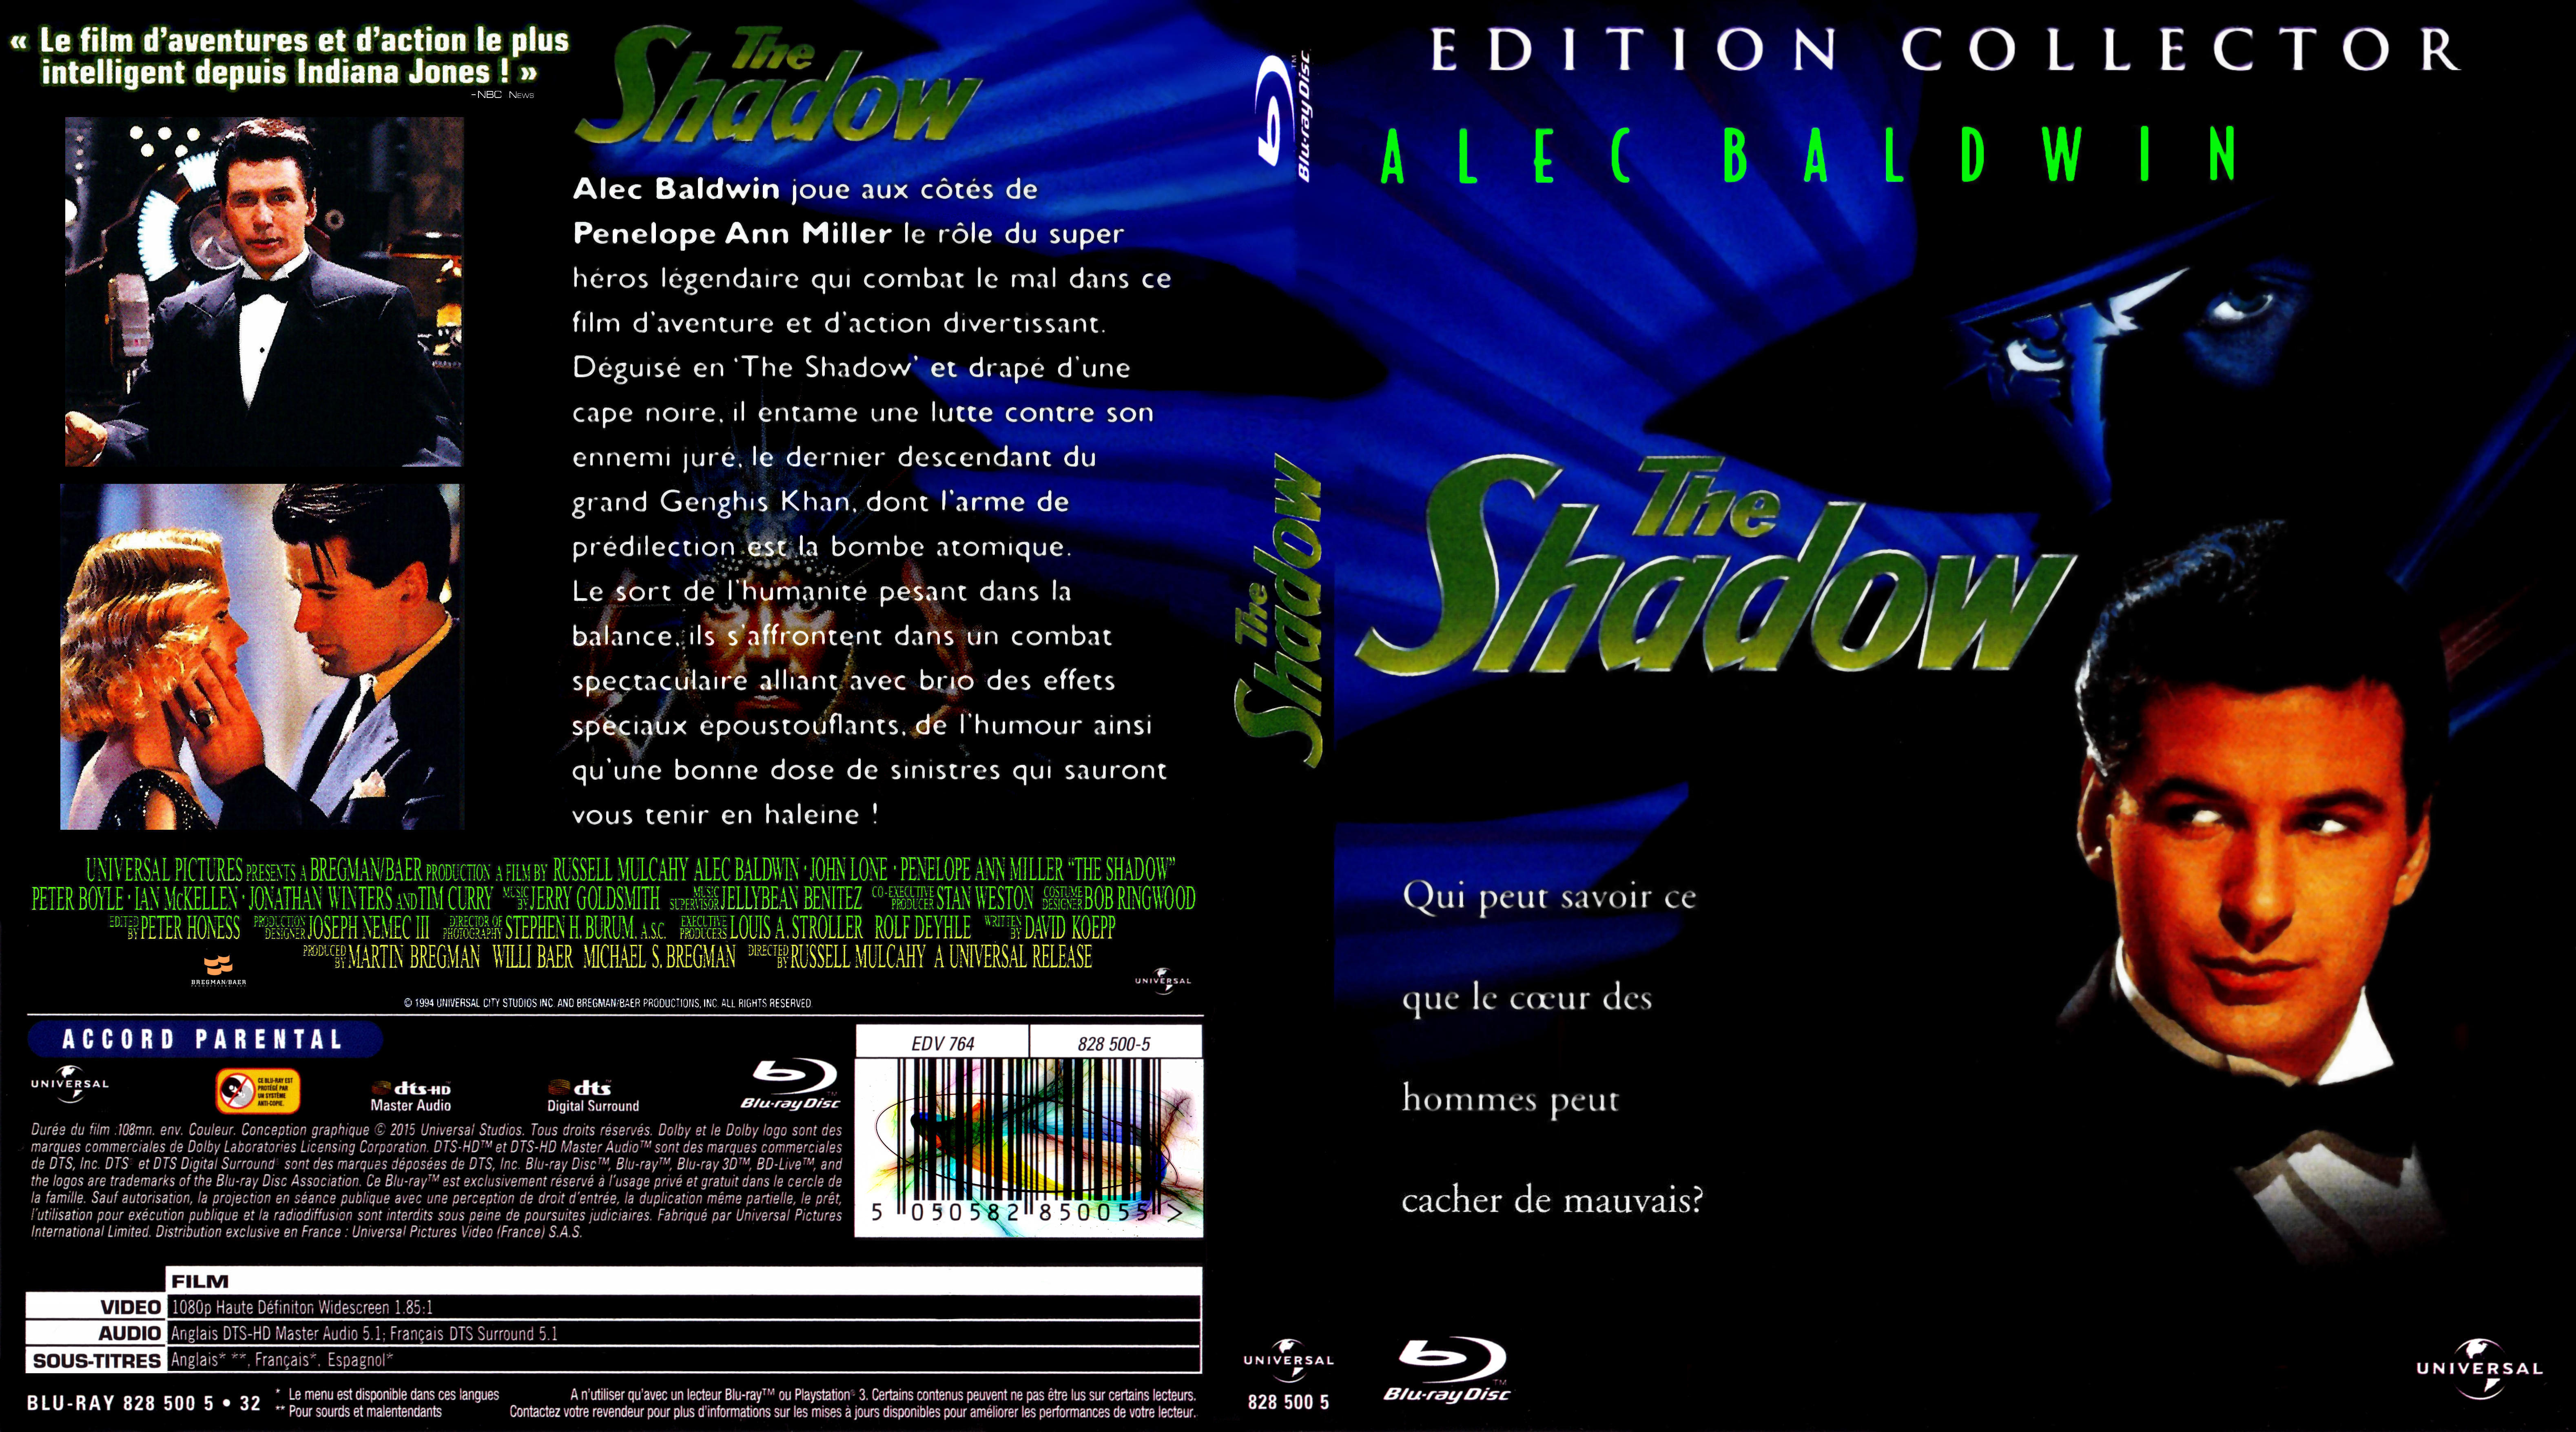 Jaquette DVD The shadow custom (BLU-RAY)